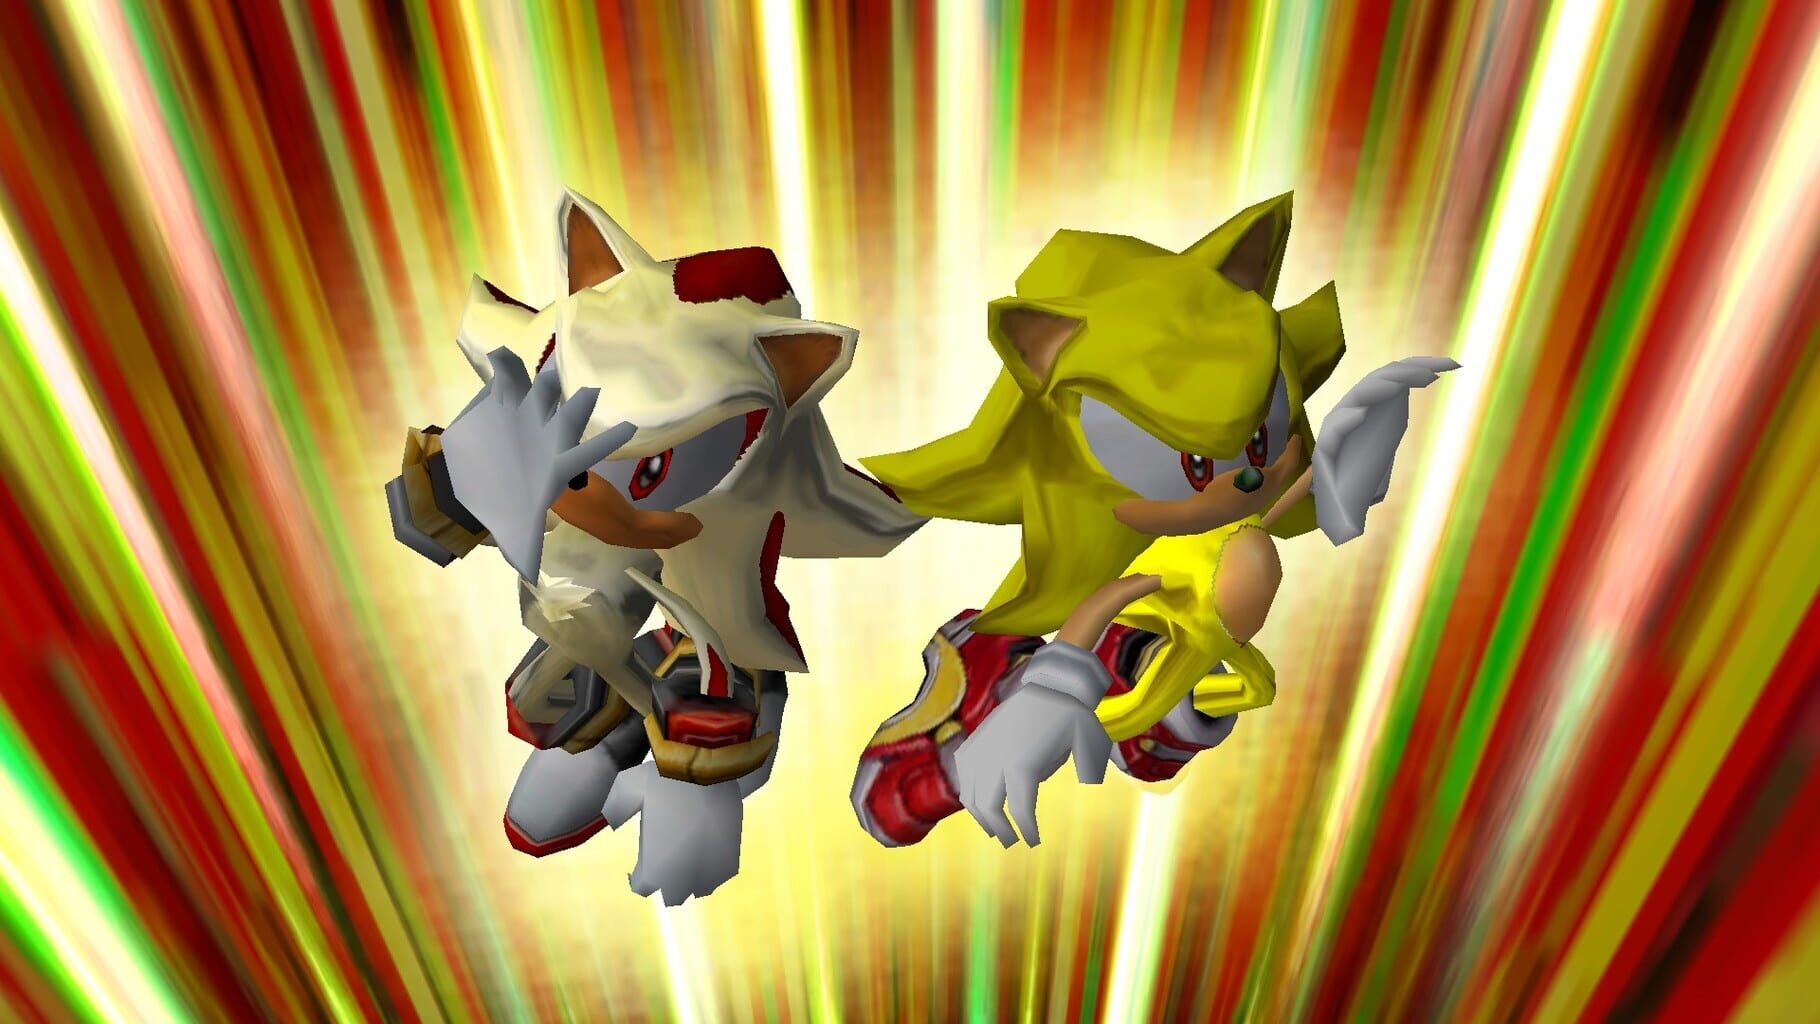 Sonic Adventure 2: Battle Image